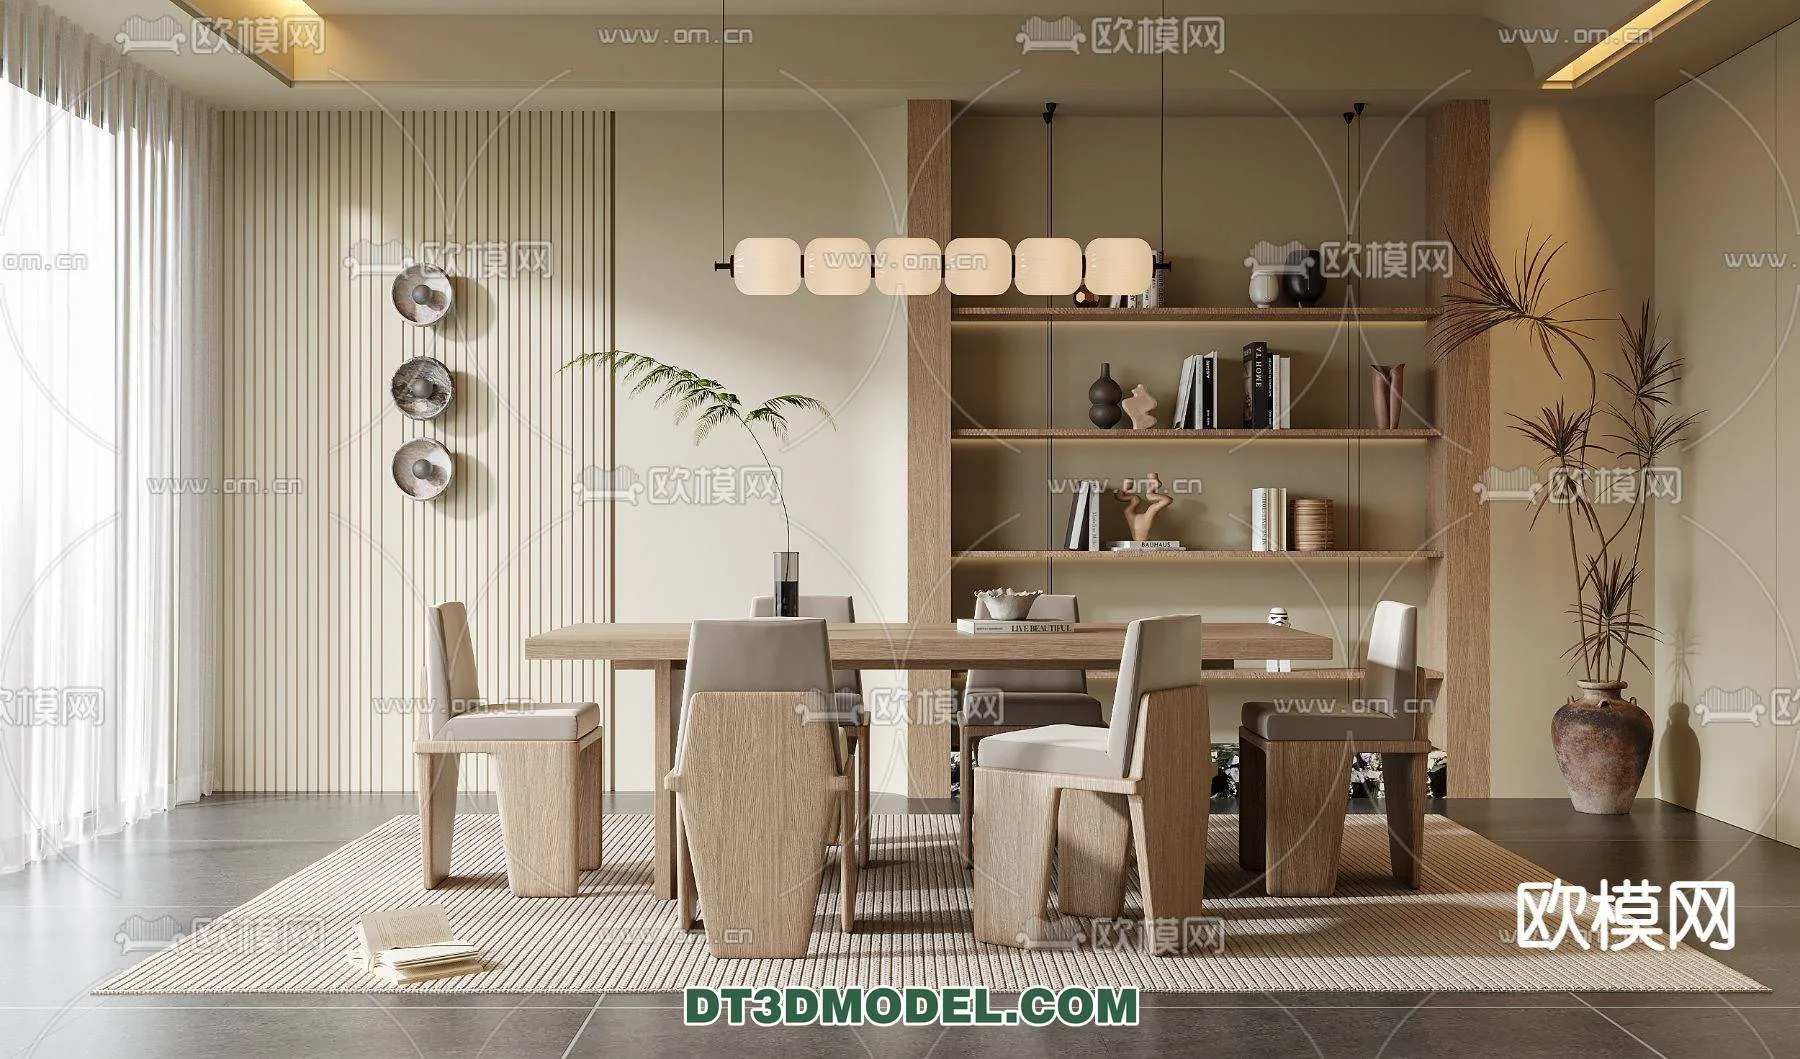 WABI SABI STYLE 3D MODELS – DINING TABLE – 0159